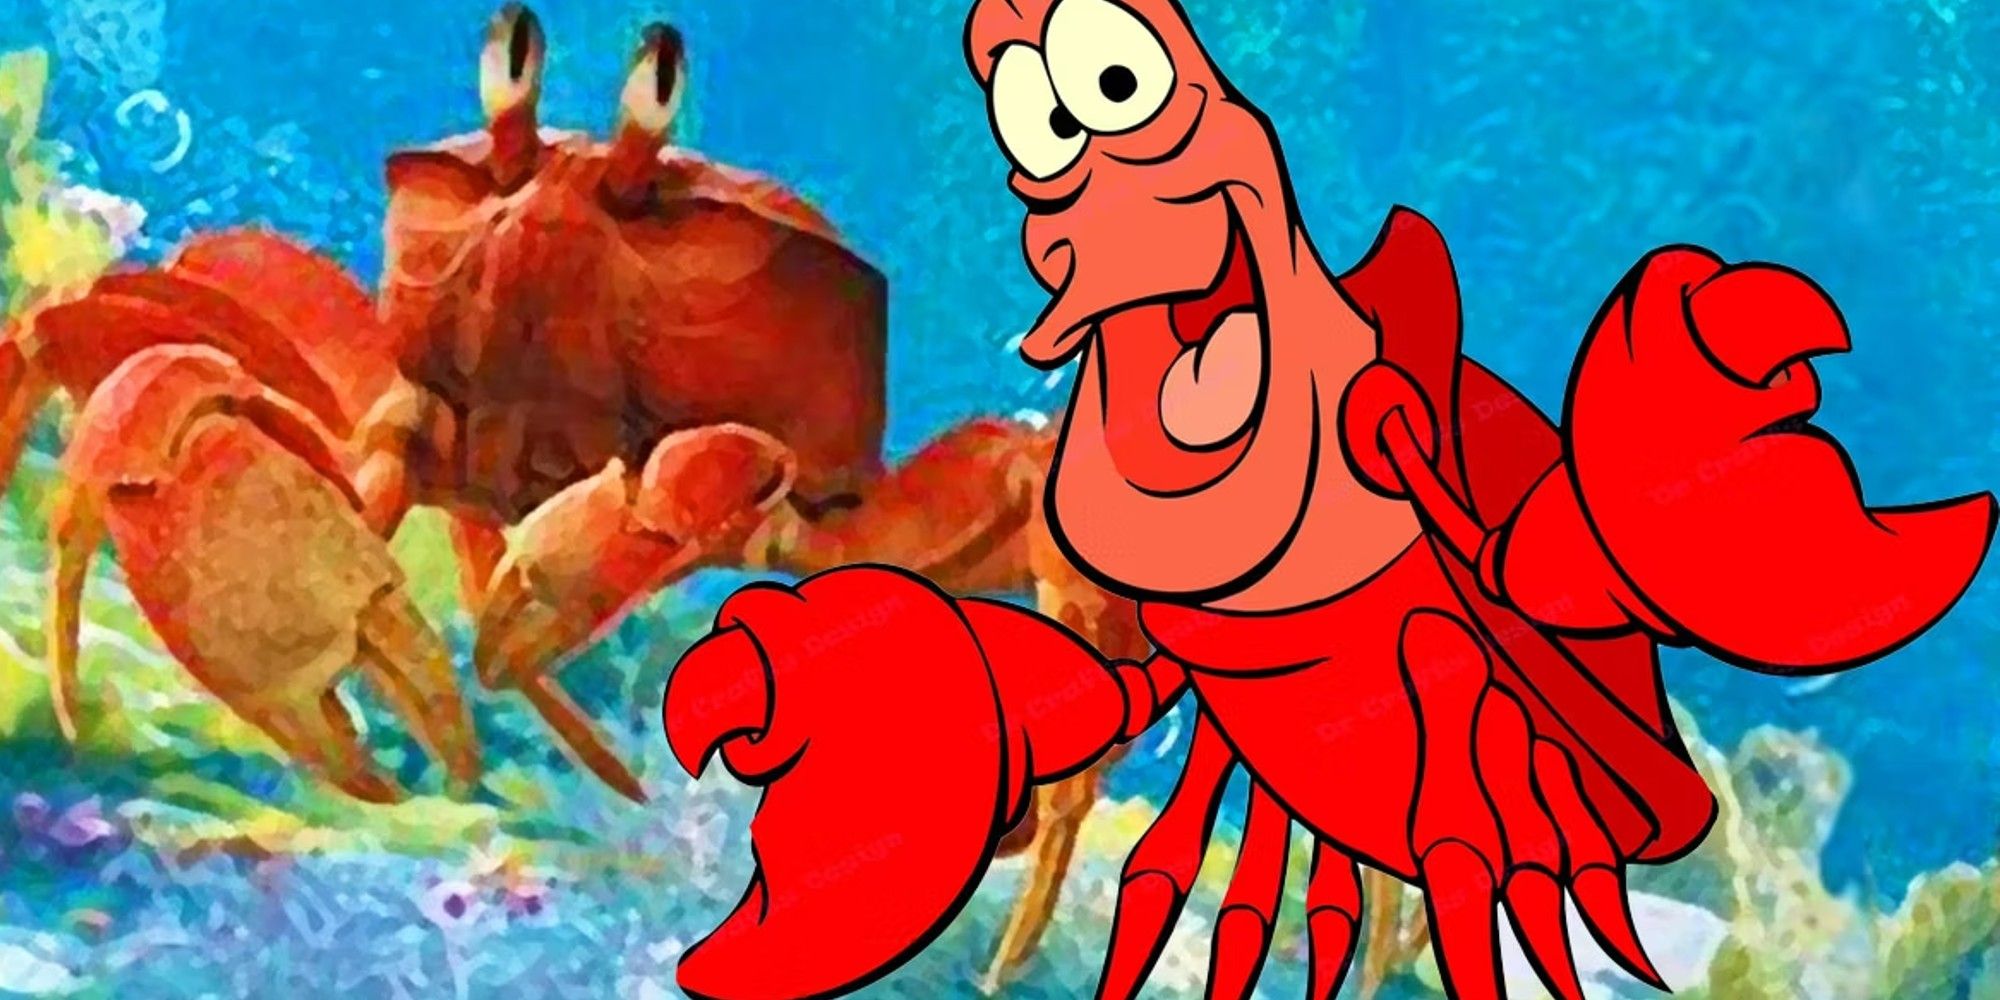 was sebastian a crab or a lobster